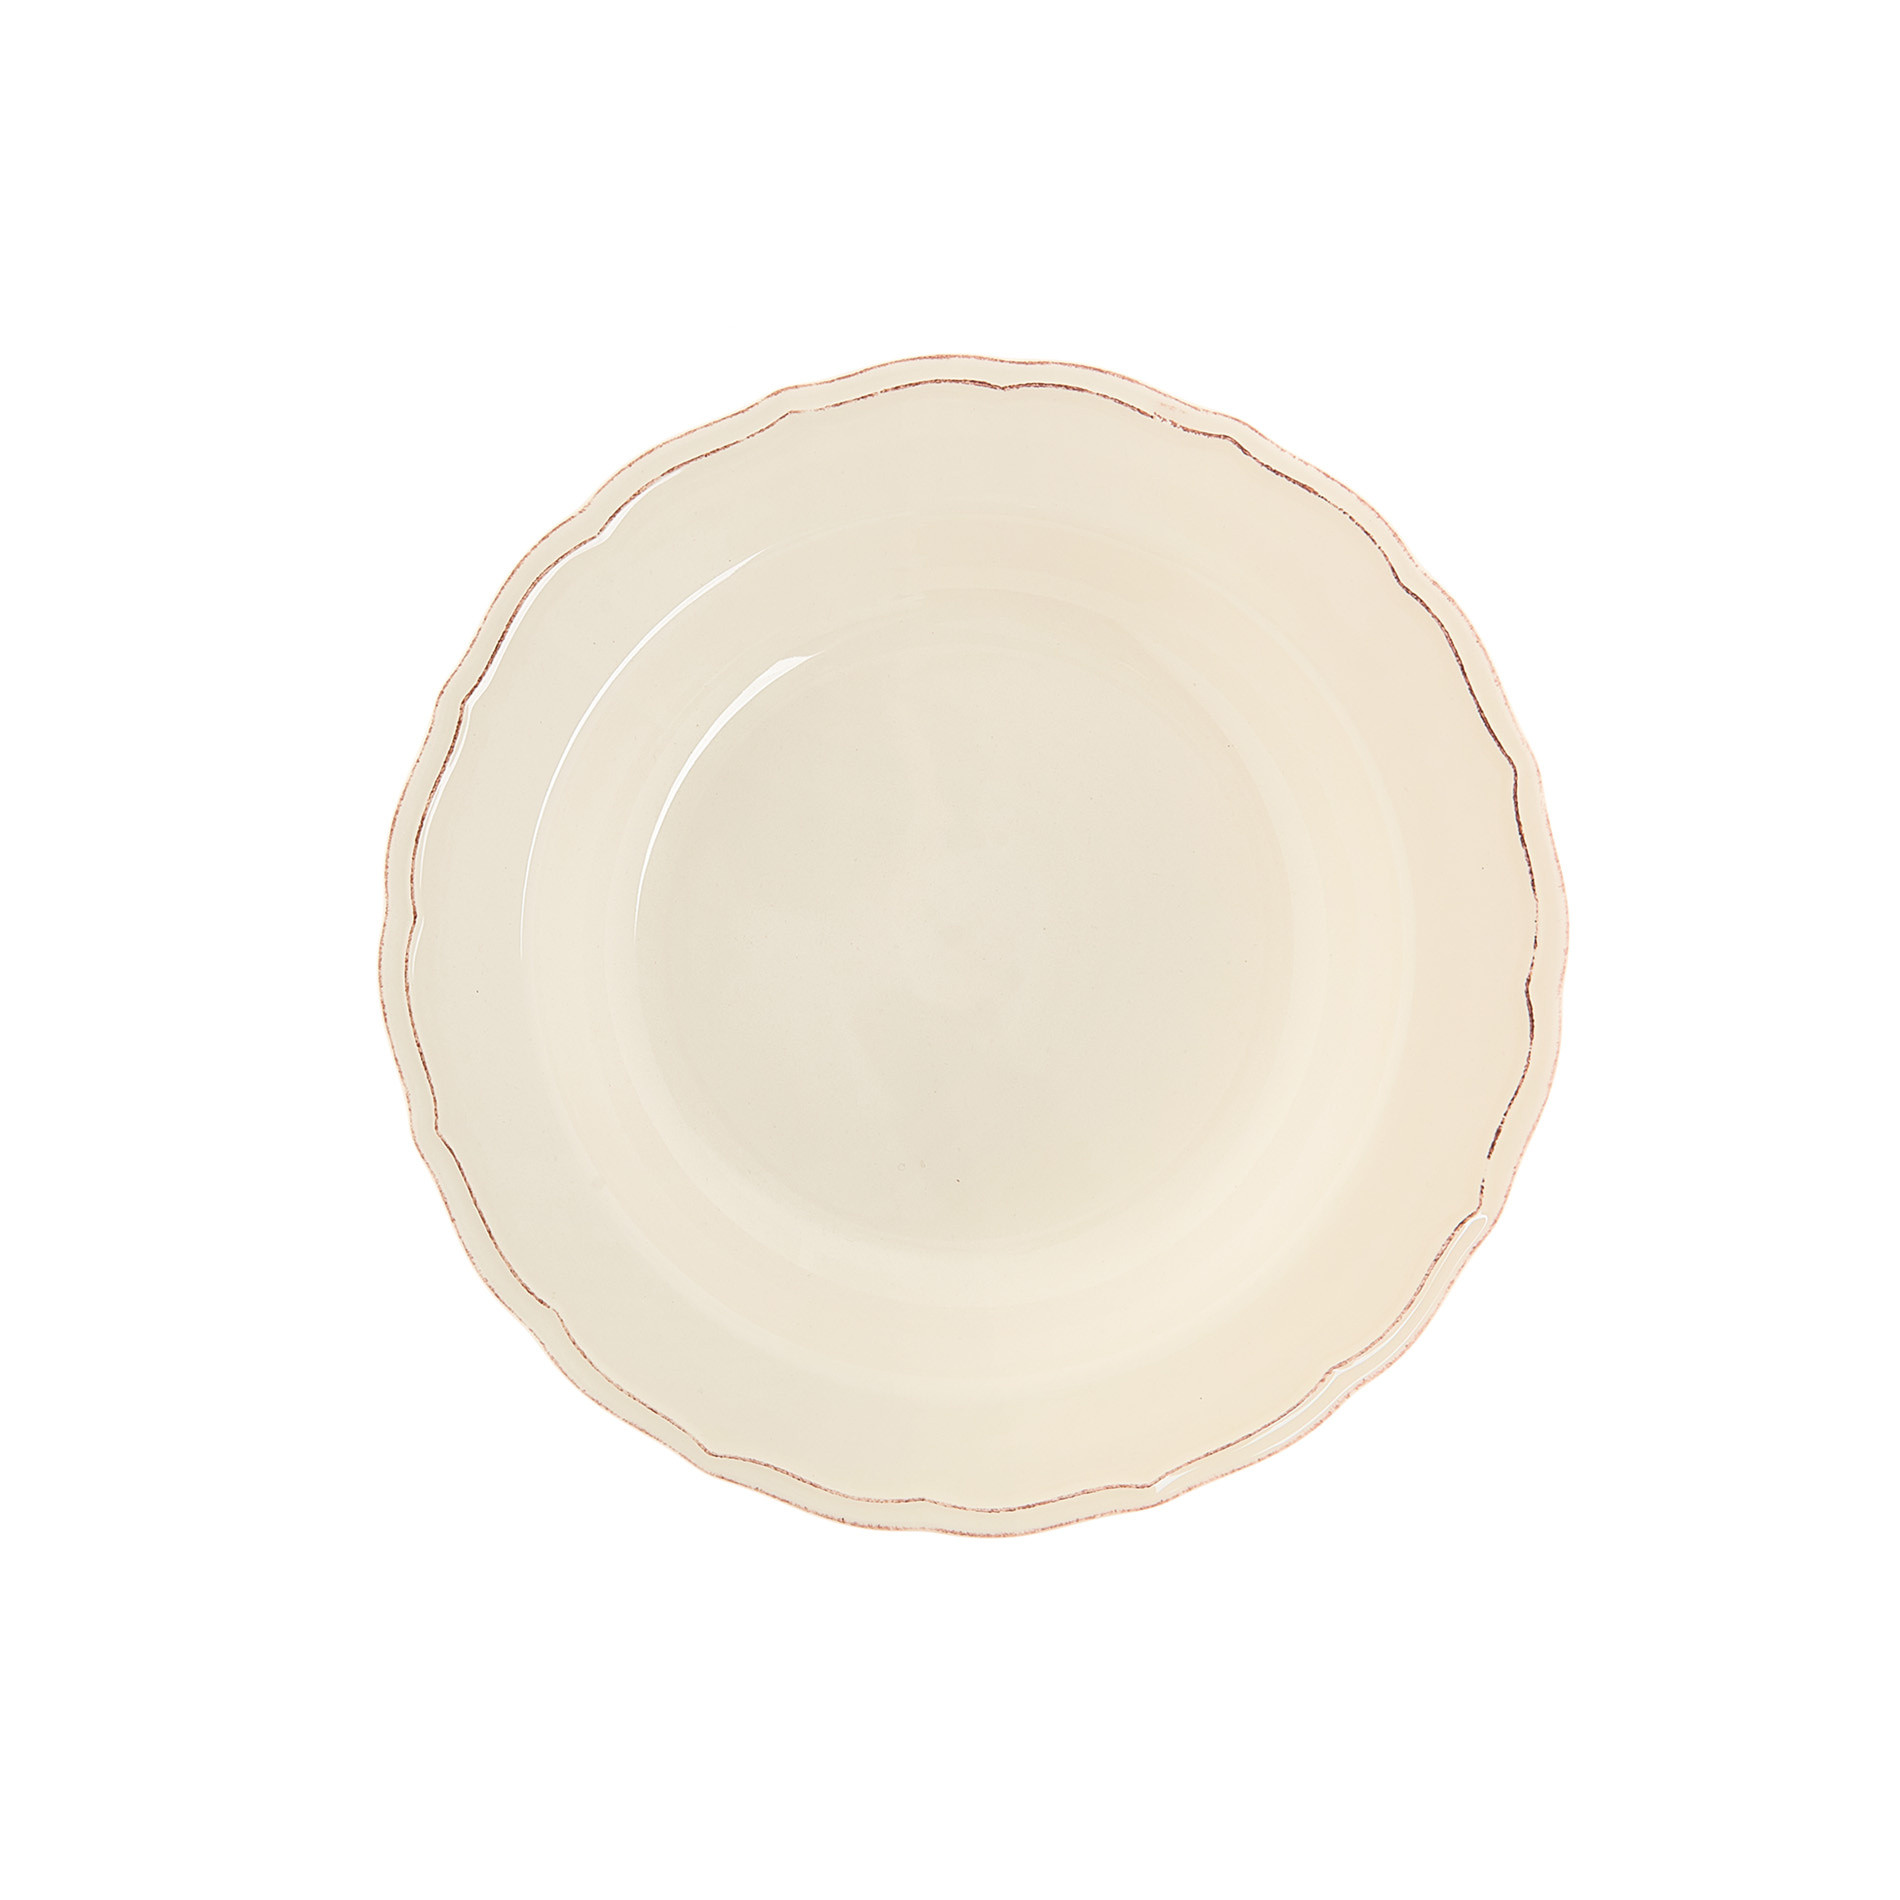 Dona Maria ceramic soup bowl, White Cream, large image number 3